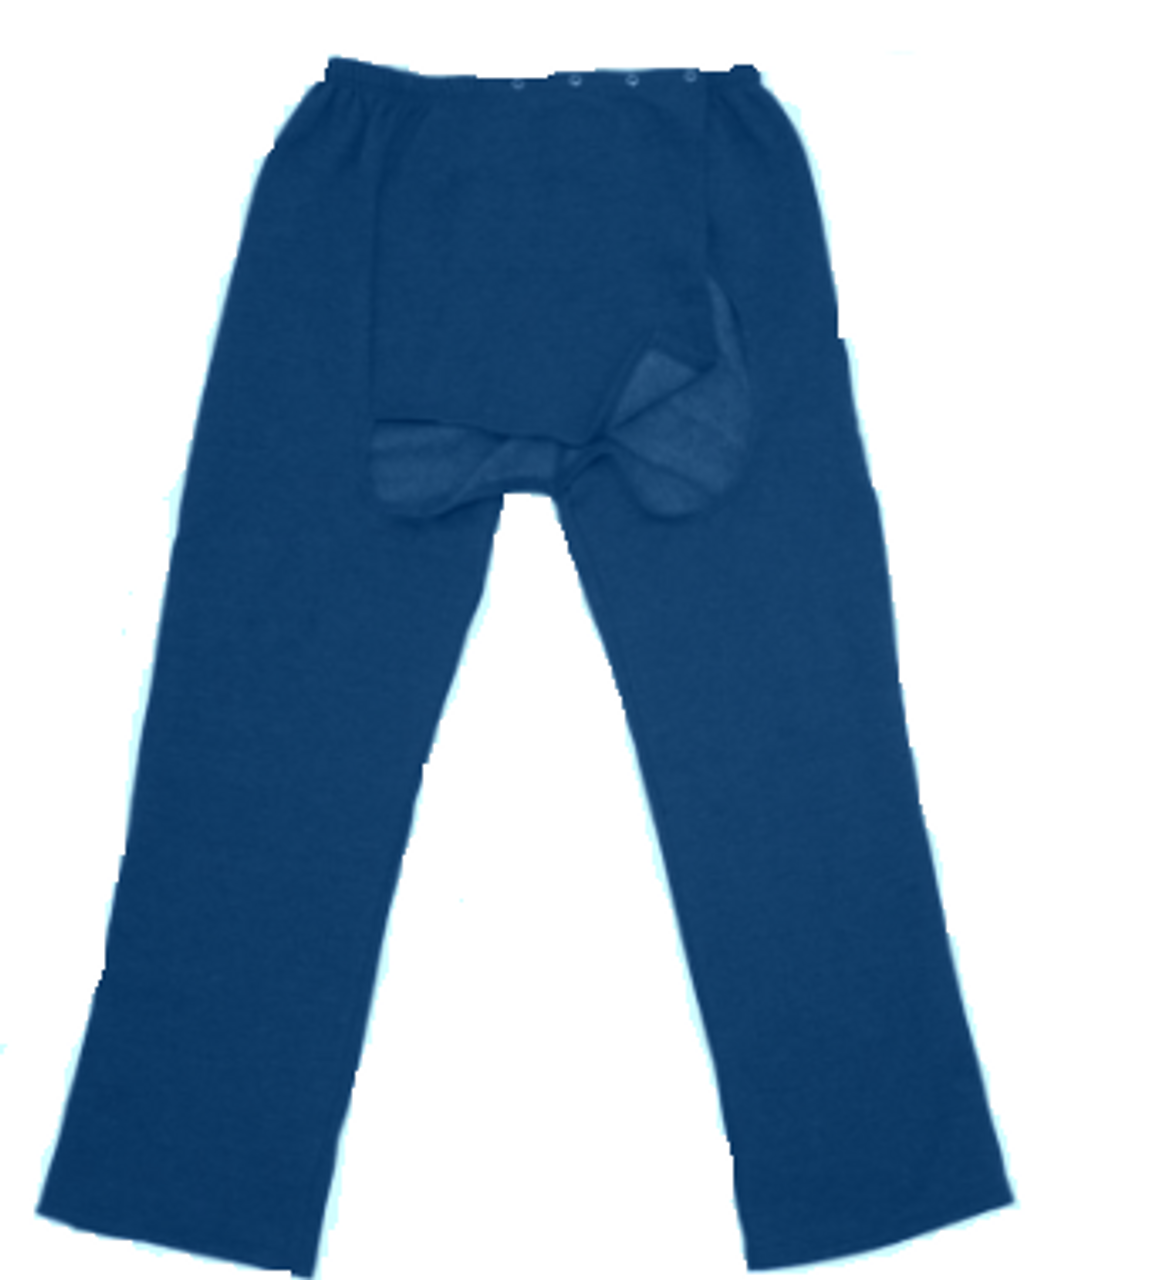 Silvert's 509400605 Fleece Adaptive Wheelchair Pants For Men , Size X-Large, BLUE (Silvert's 509400605)